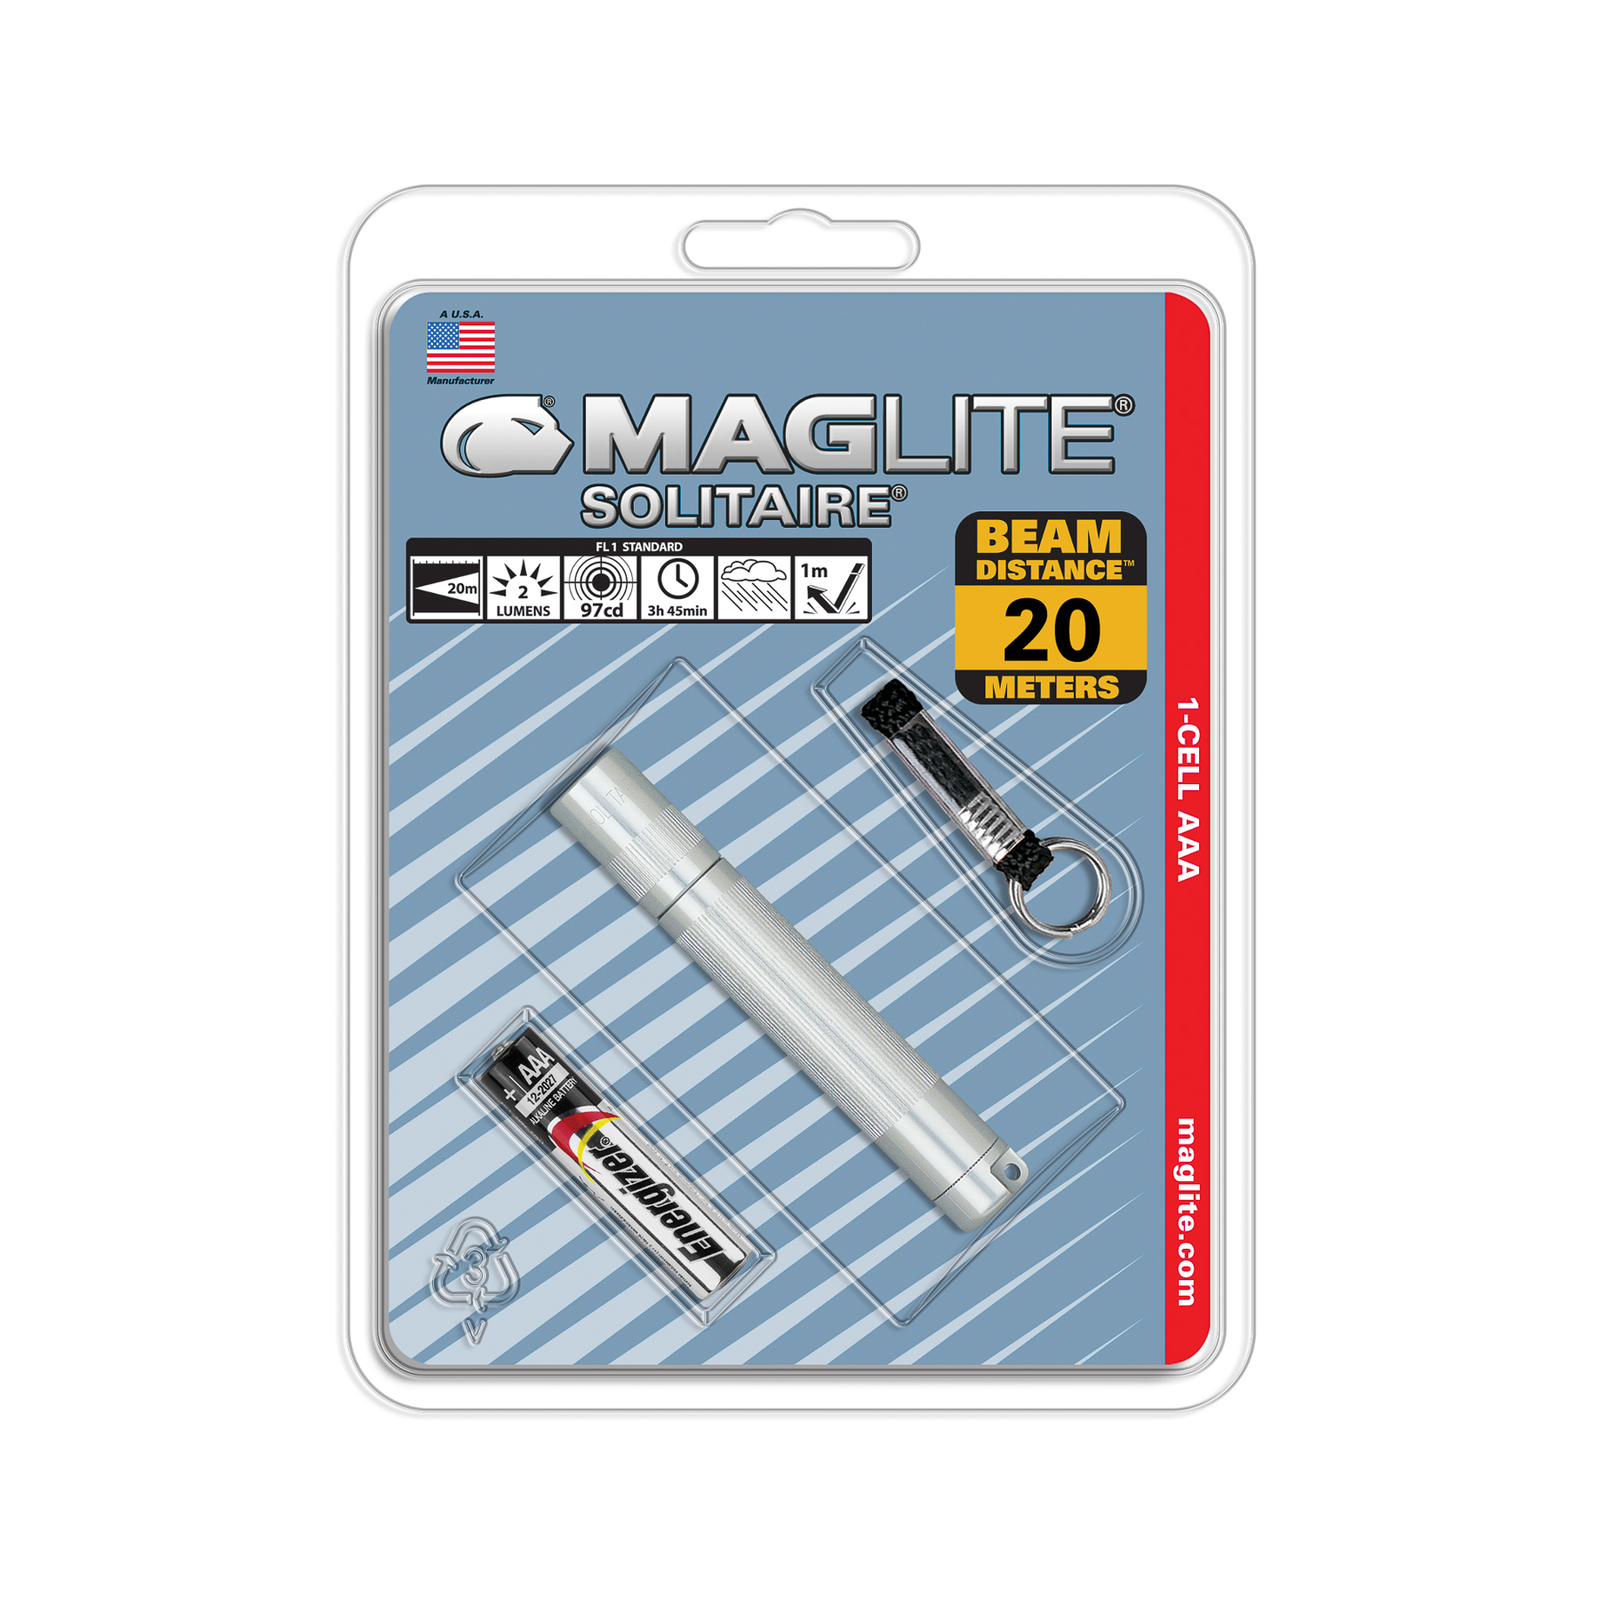 Maglite Xenon taskulamppu Solitaire 1-Cell AAA, hopea